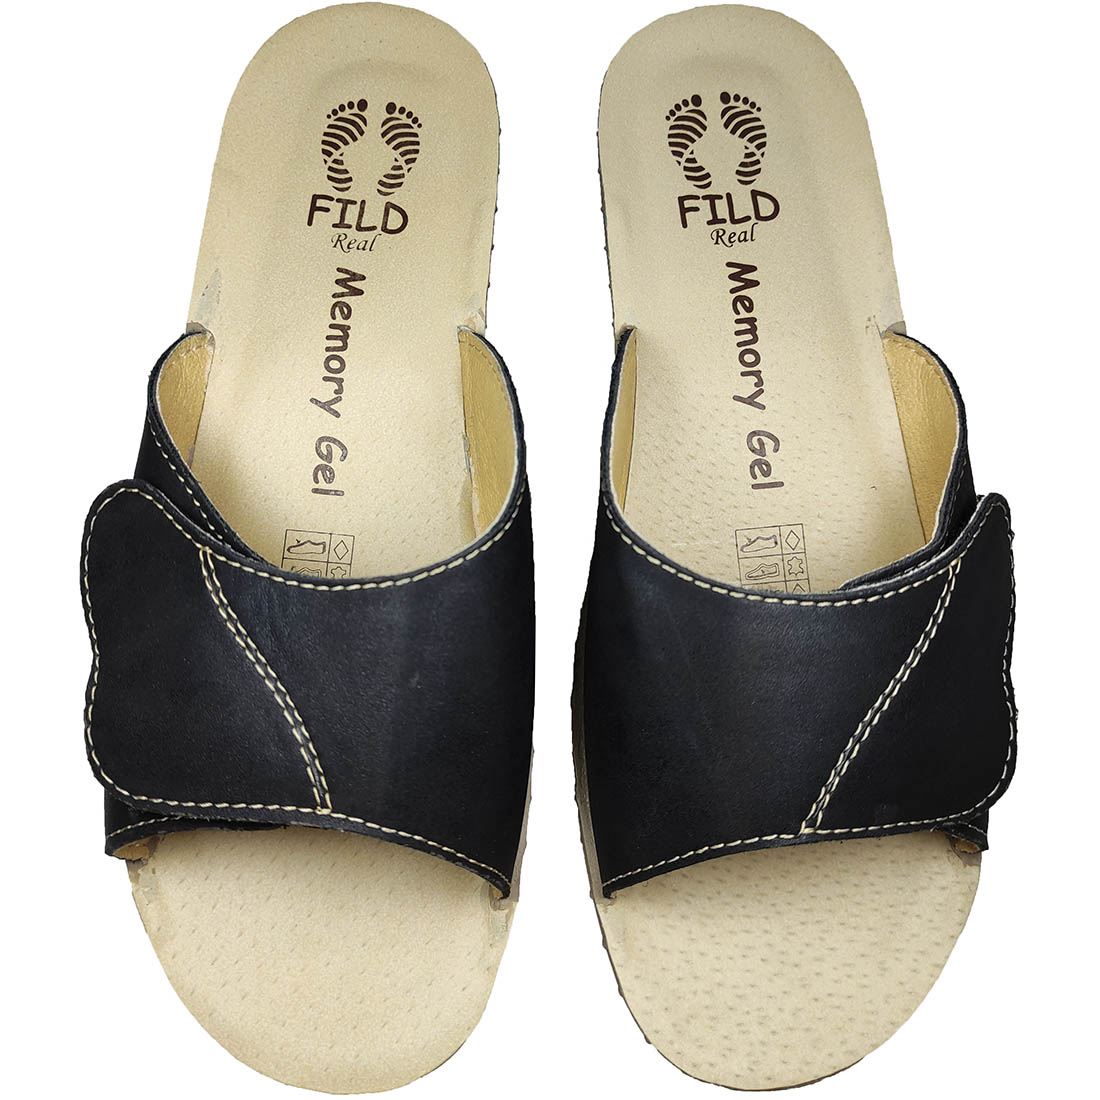 Fild Napoleana 2001 Anatomical Leather Slippers Black